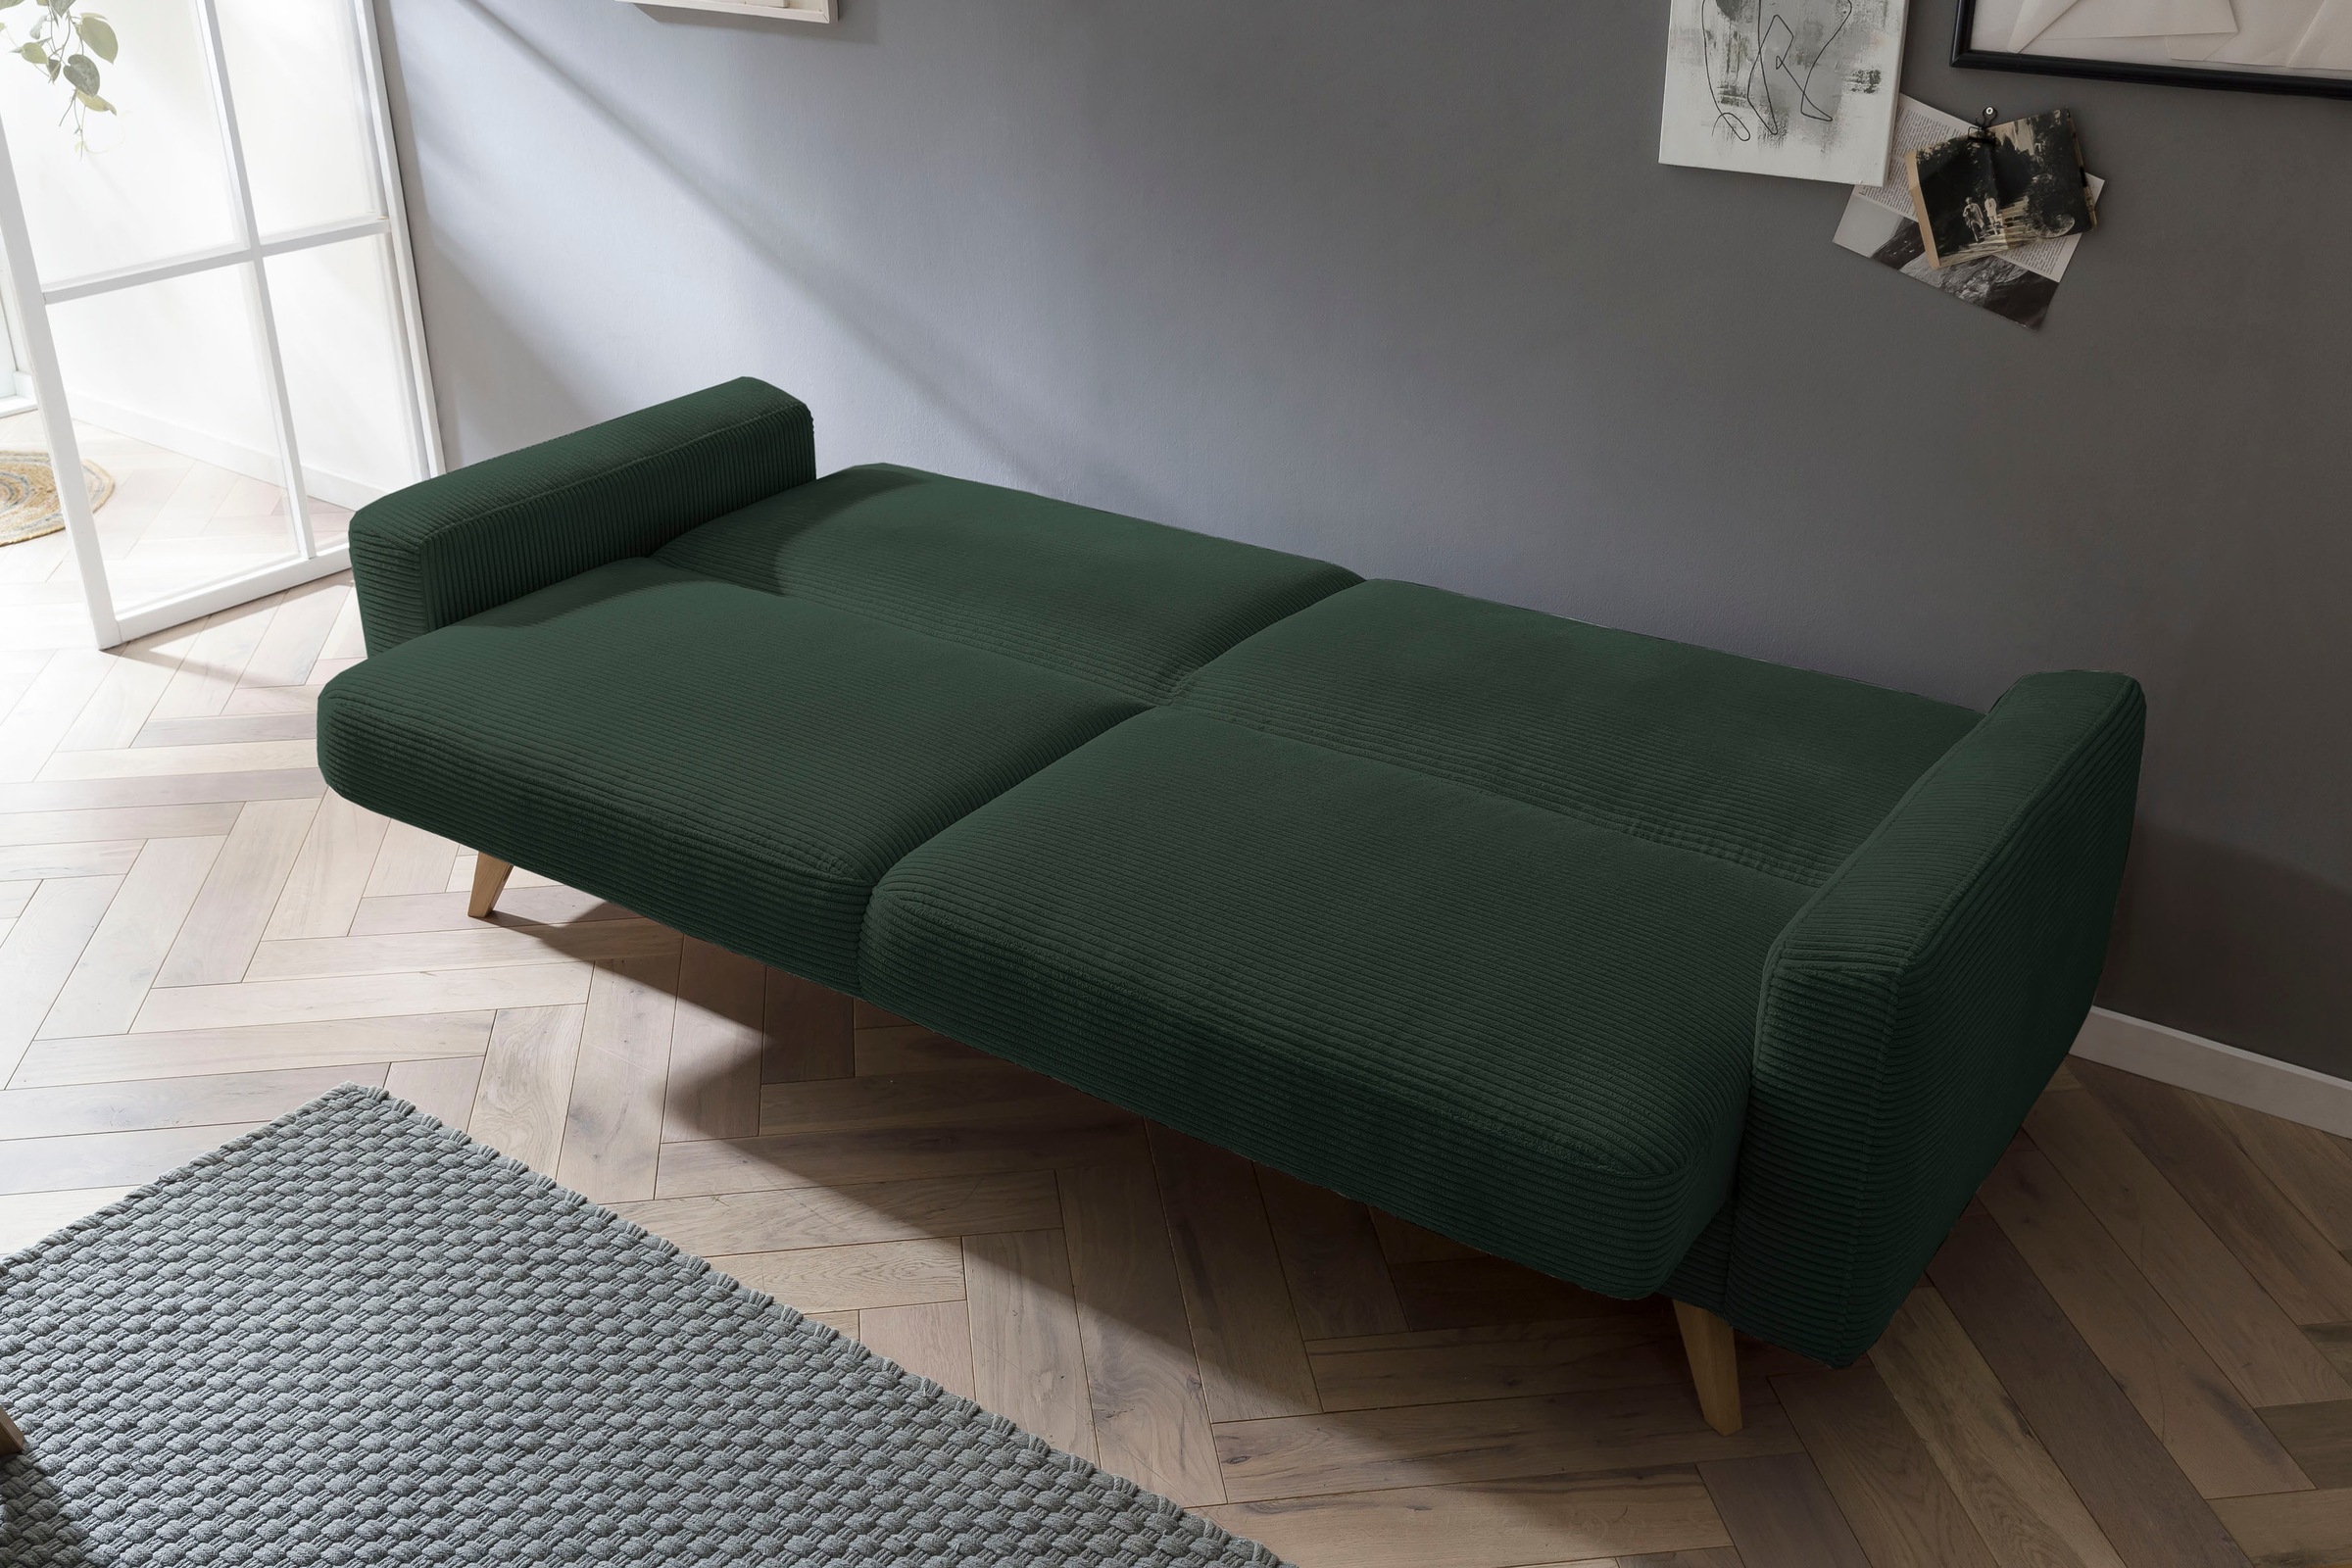 exxpo - sofa fashion 3-Sitzer »Samso«, Inklusive Bettfunktion und Bettkasten